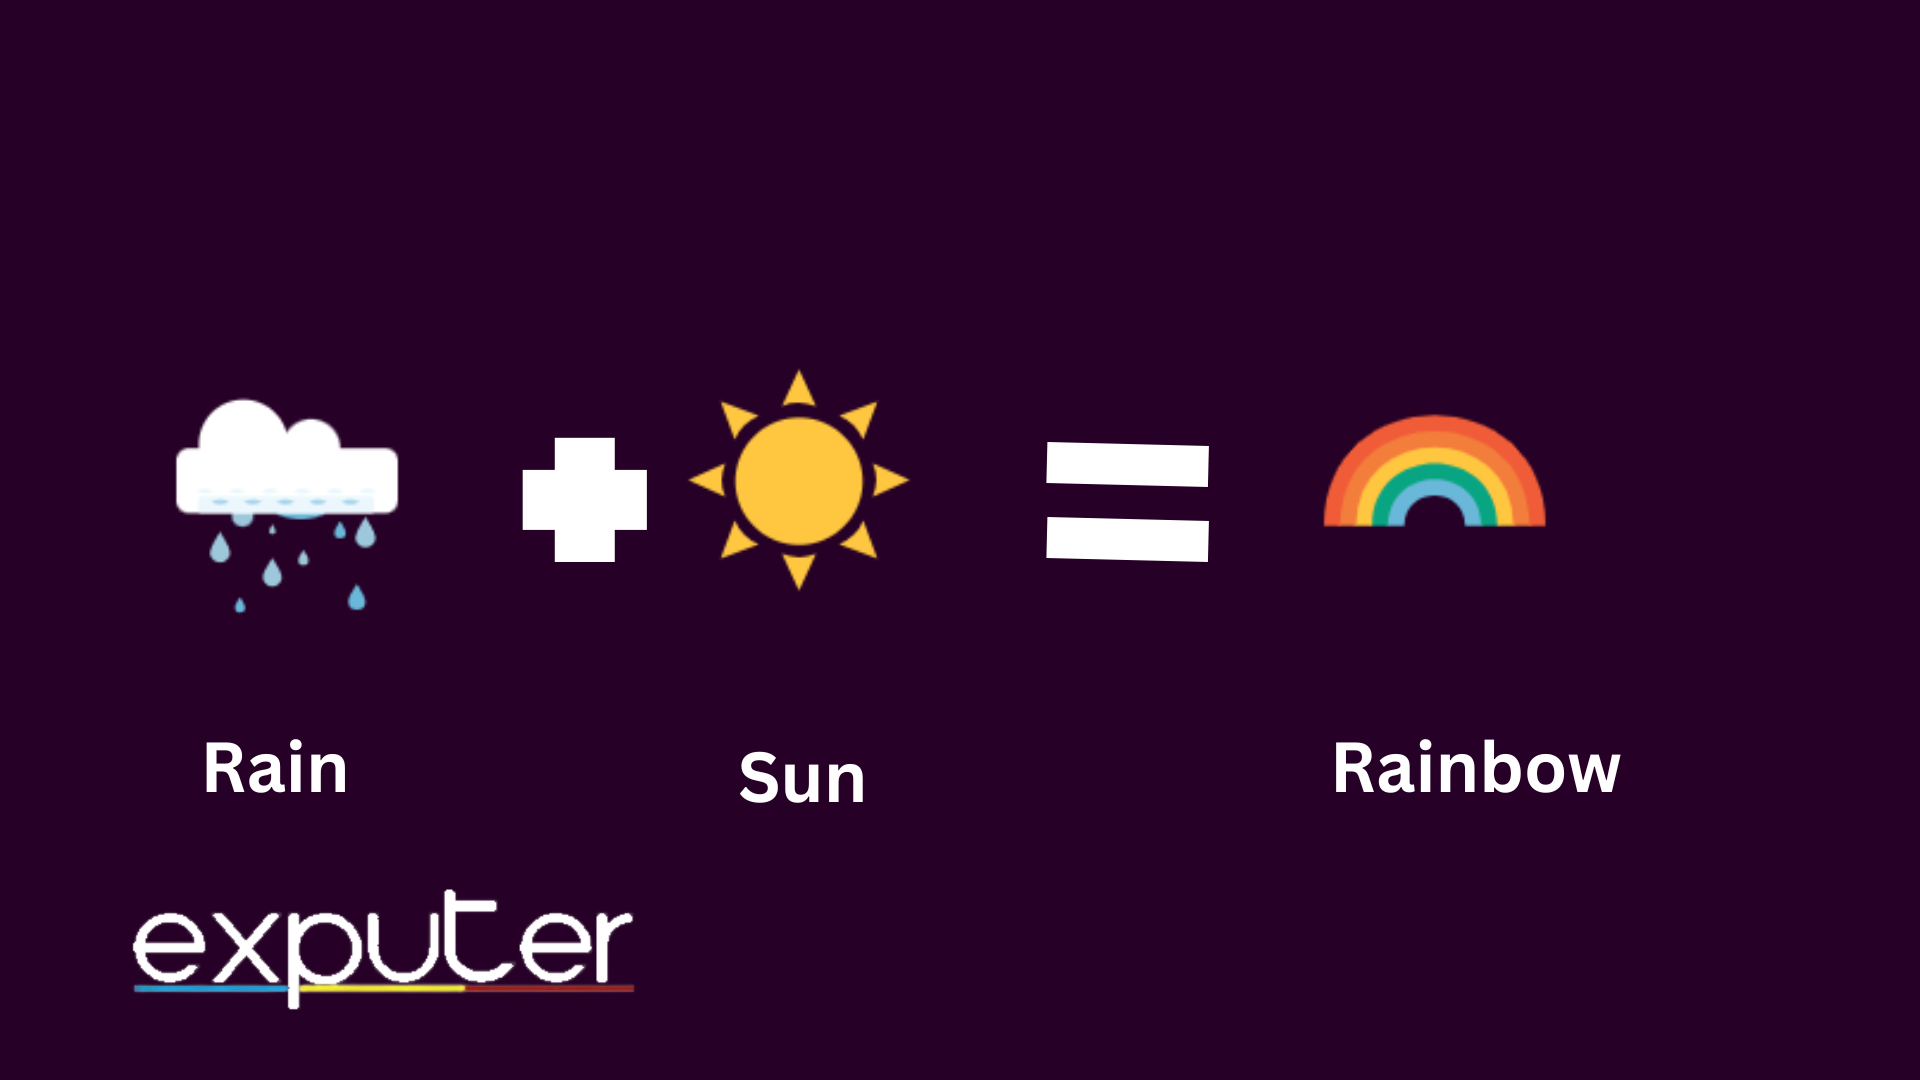 making rainbow from rain and sun